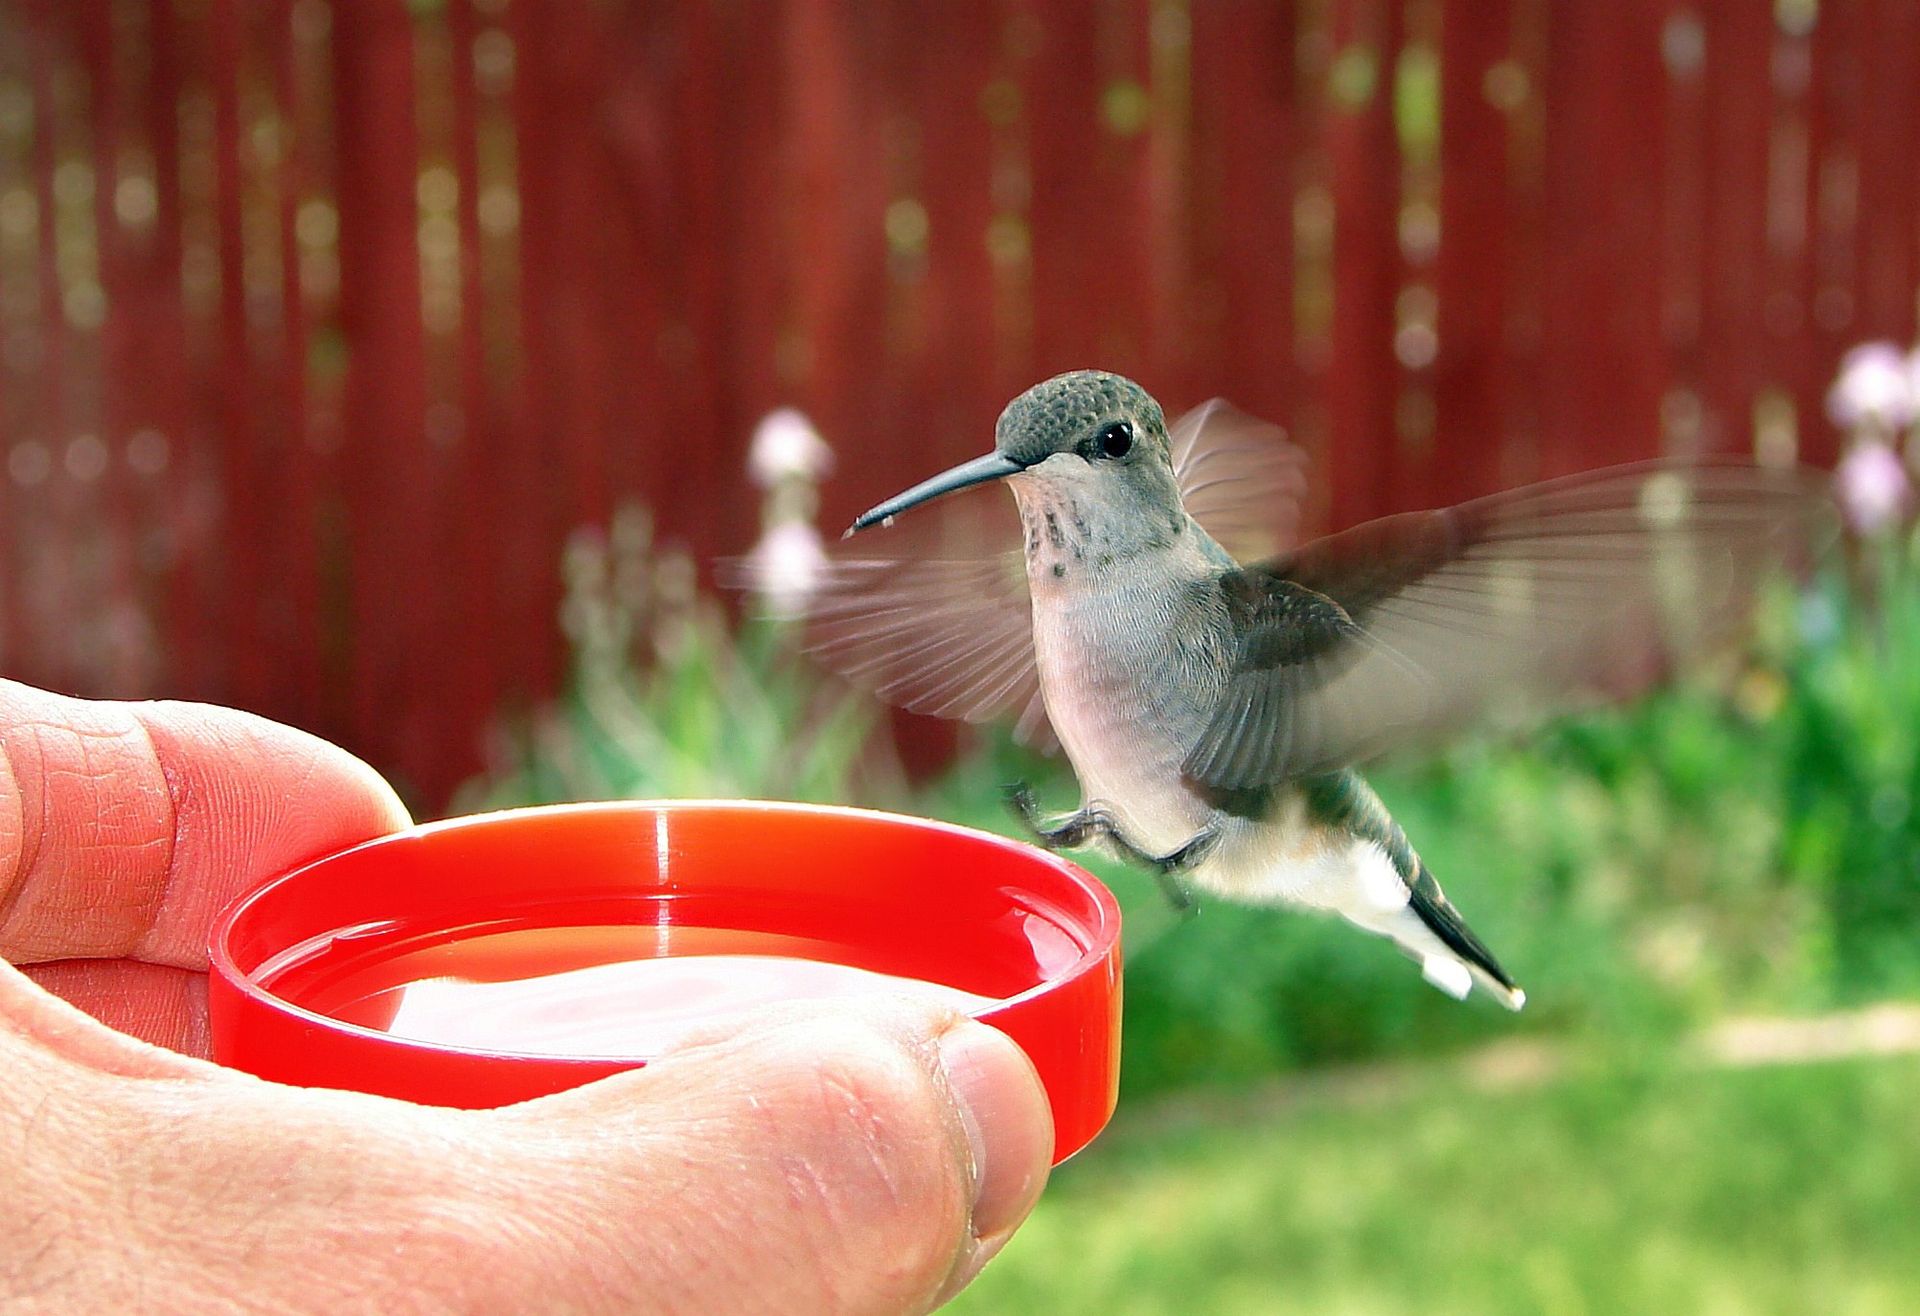 A hummingbird drinks from a feeder.